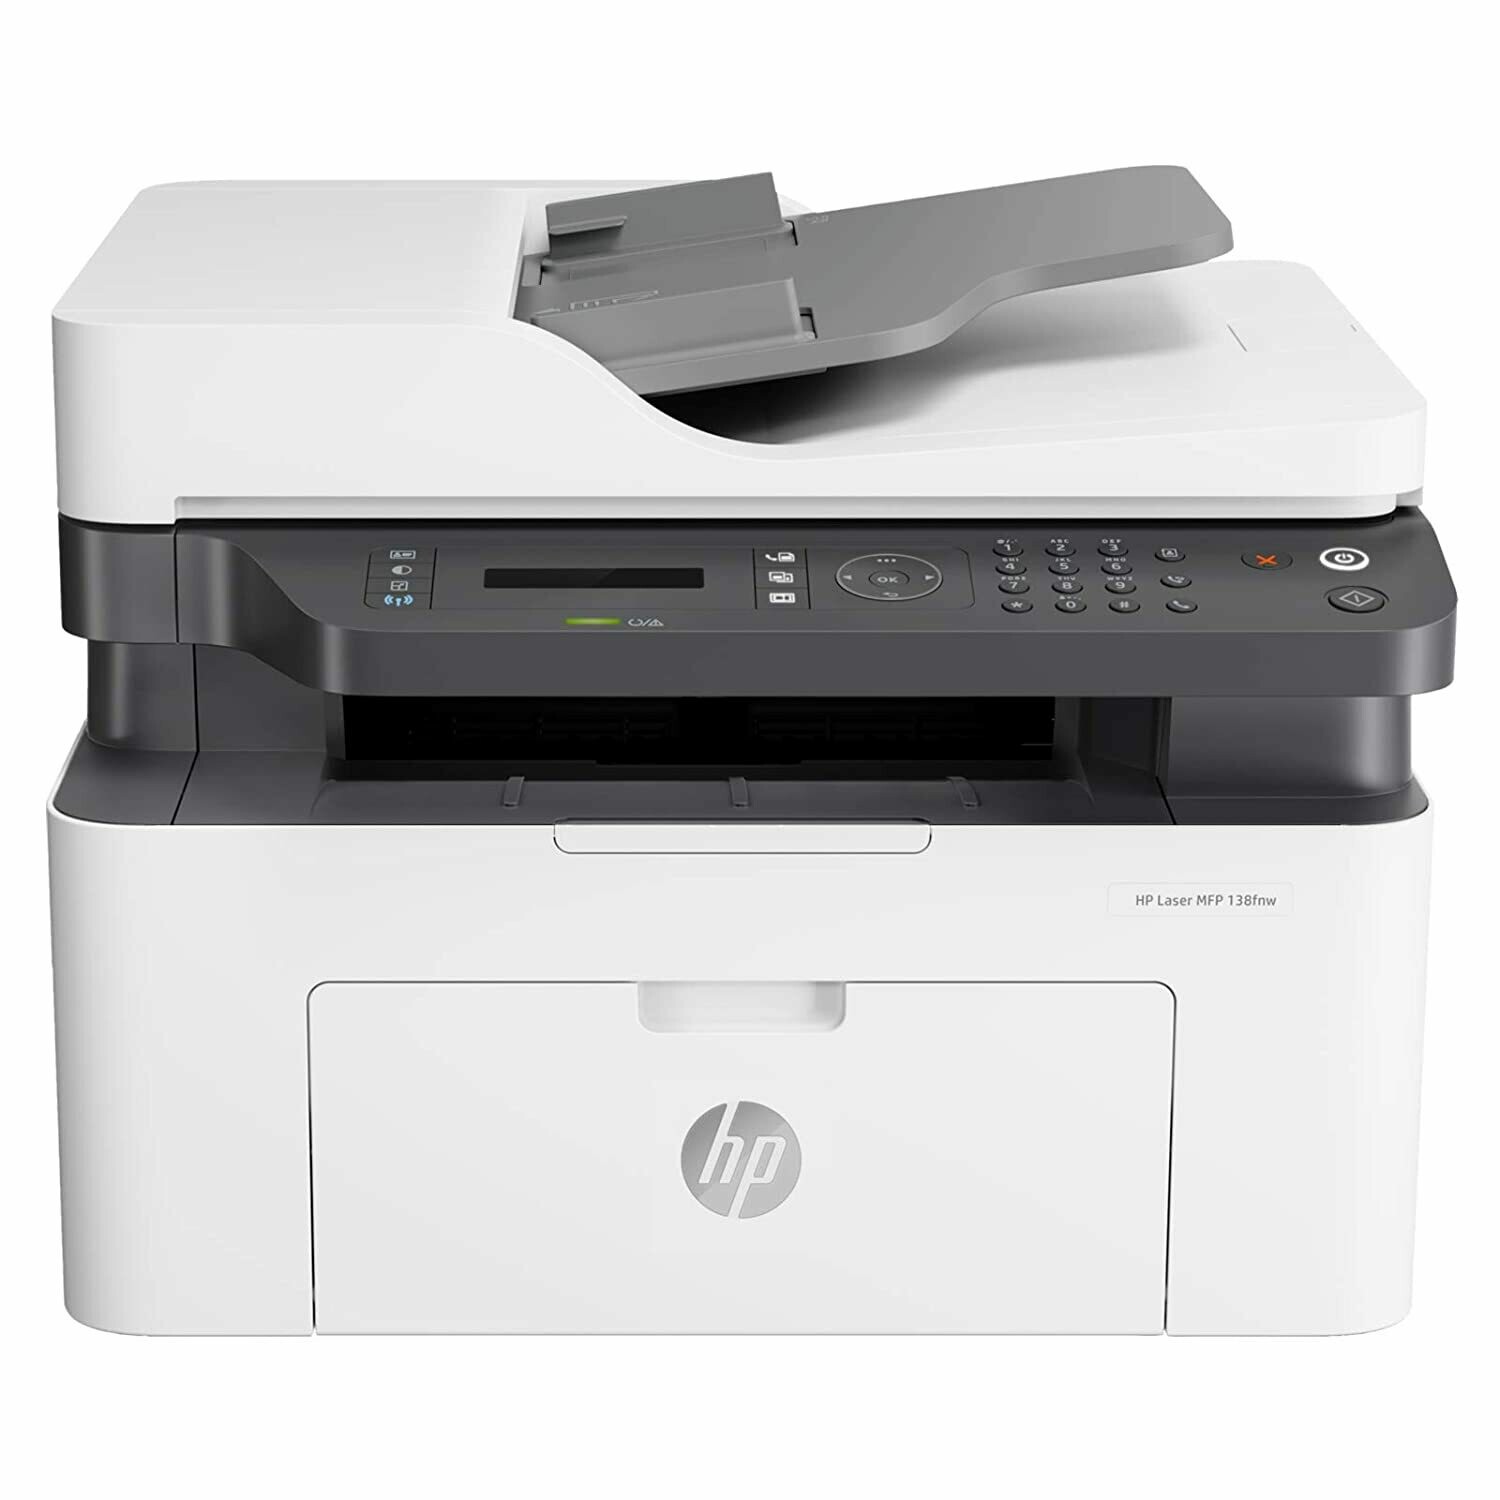 HP MFP 138fnw Multi-function Monochrome Laser Printer